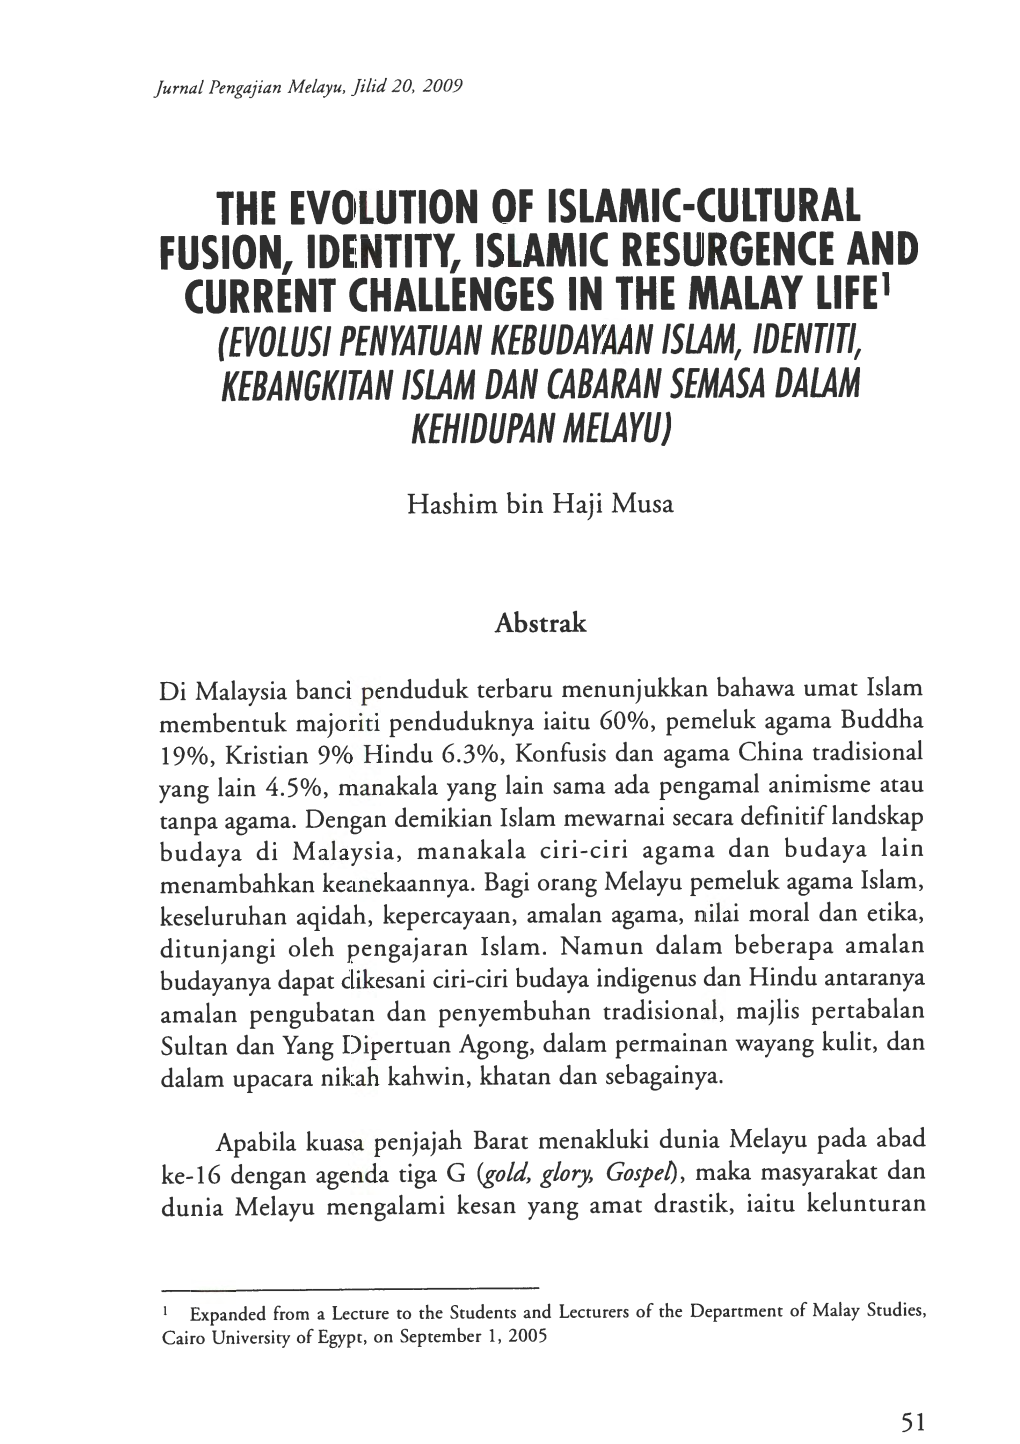 The Evolution of Islamic-Cultural Fusion, Identity, Islamic Resurgence